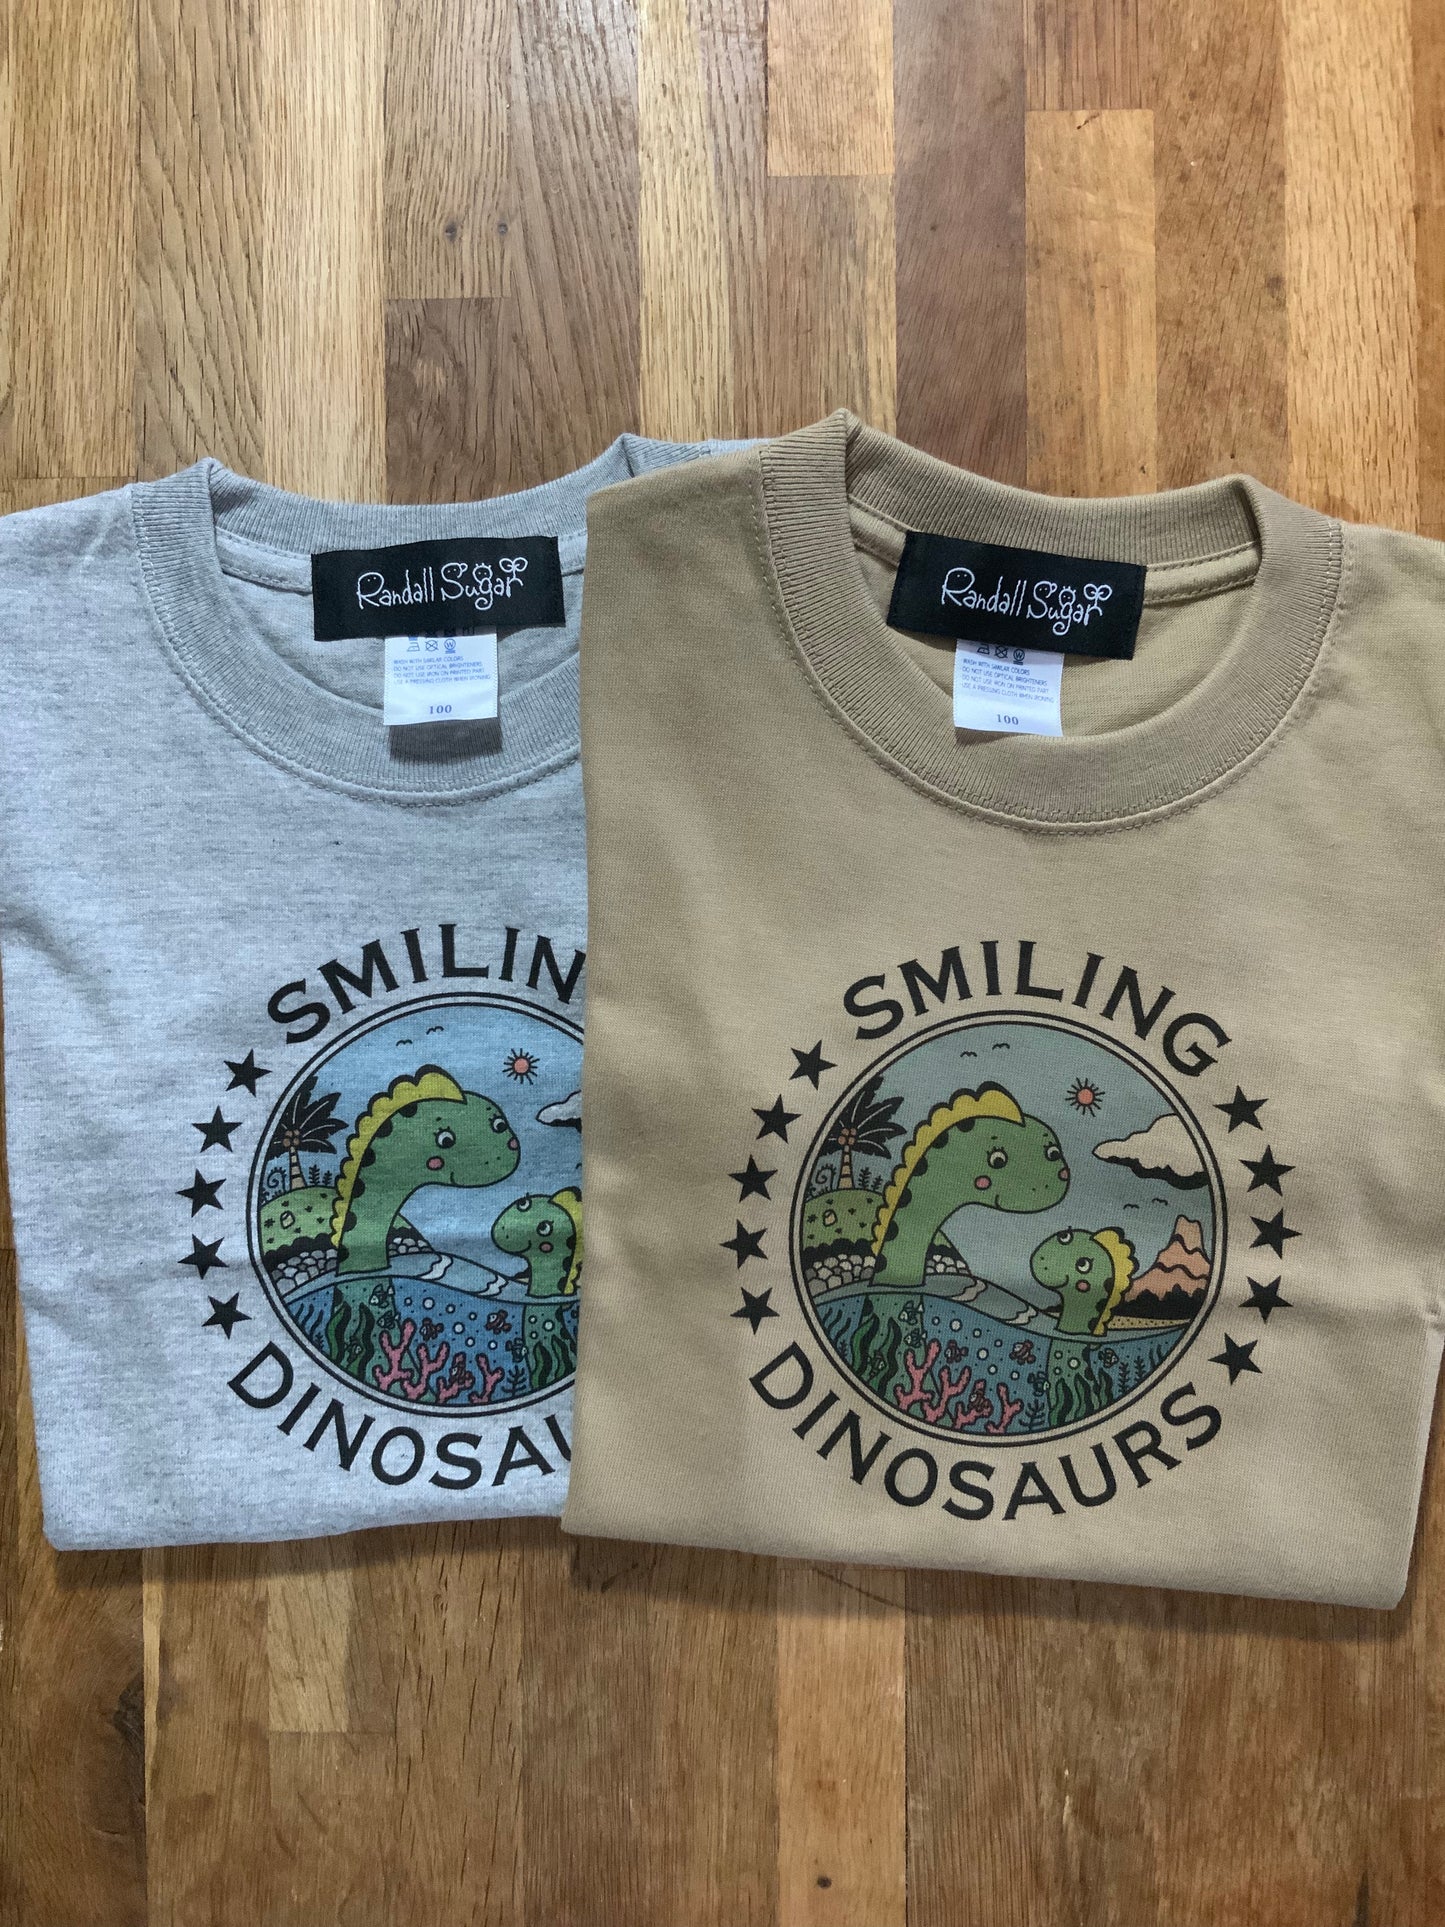 Tシャツ【Smiling Dinosaurs】